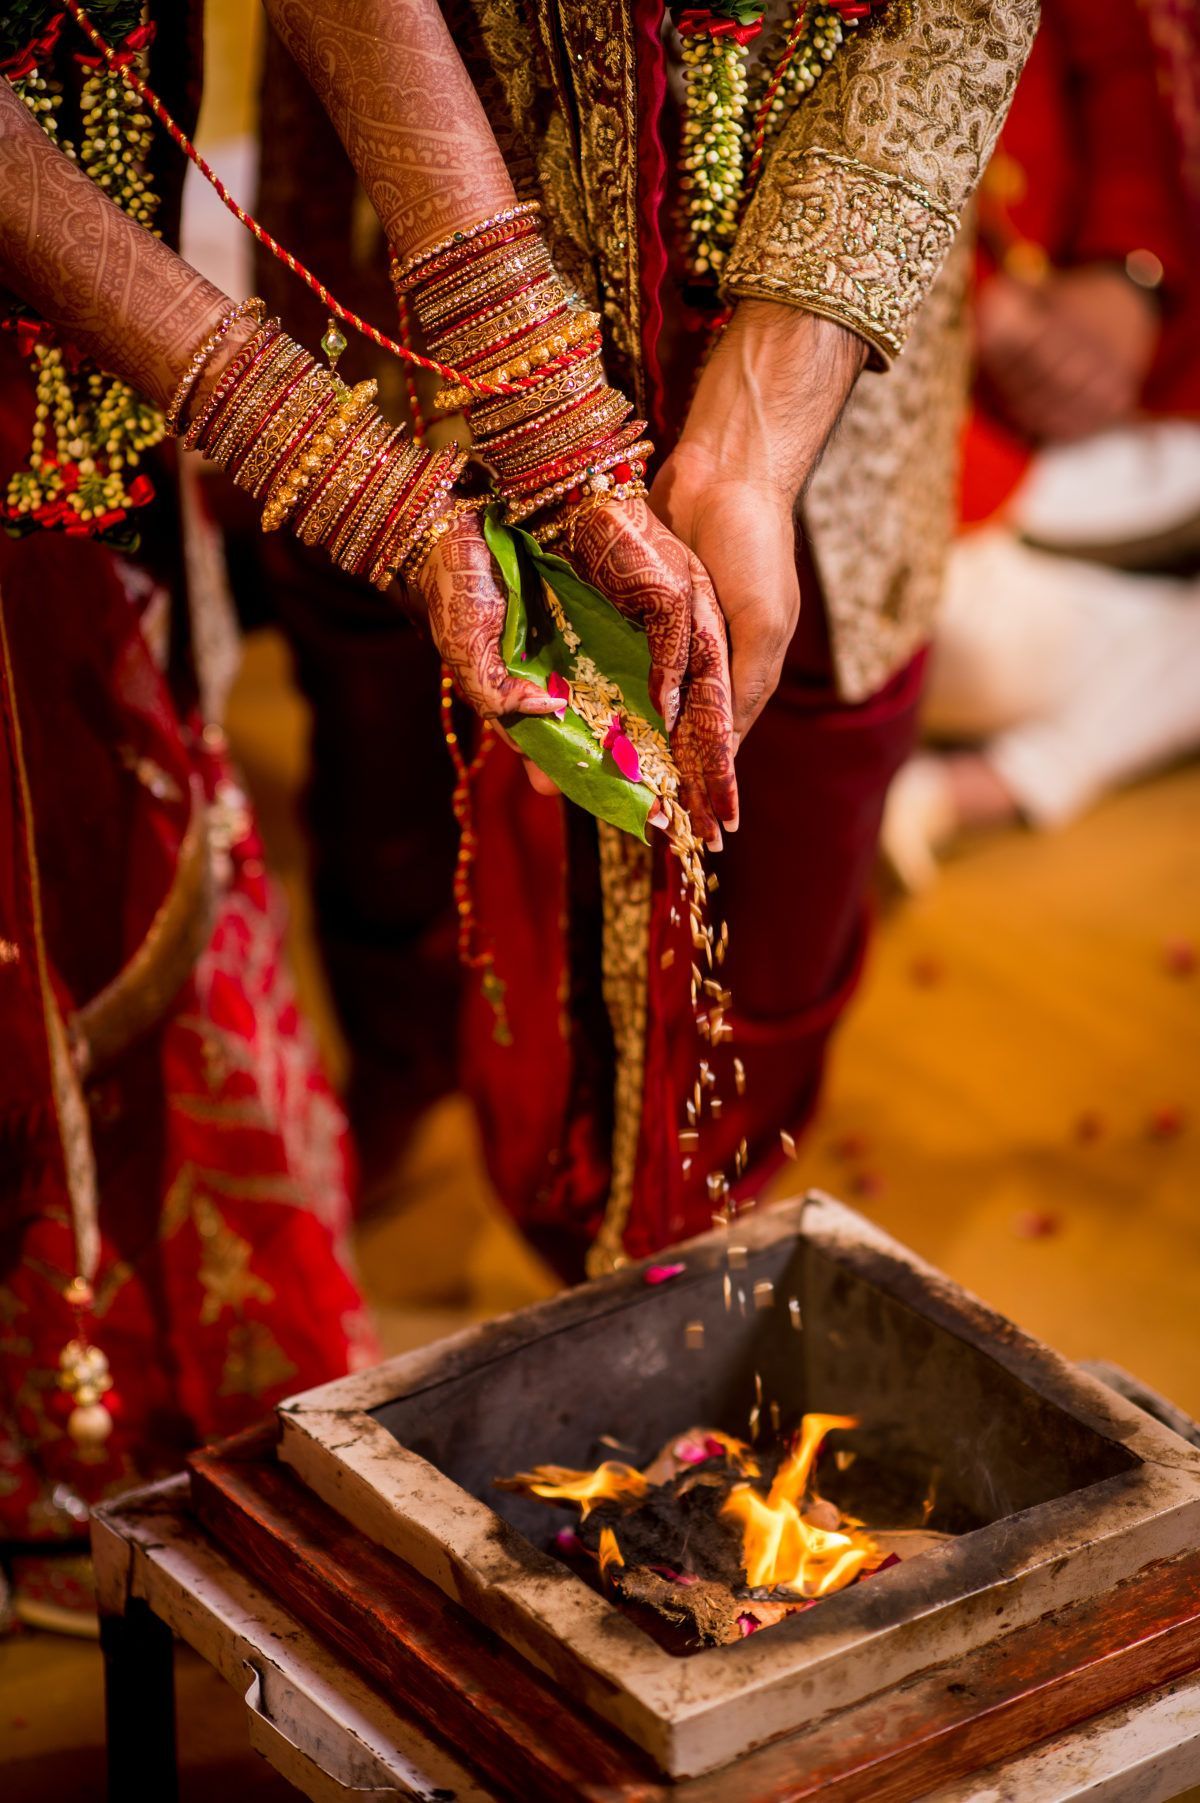 An Indian Wedding Spanning 5 Days! -   15 wedding Indian culture ideas